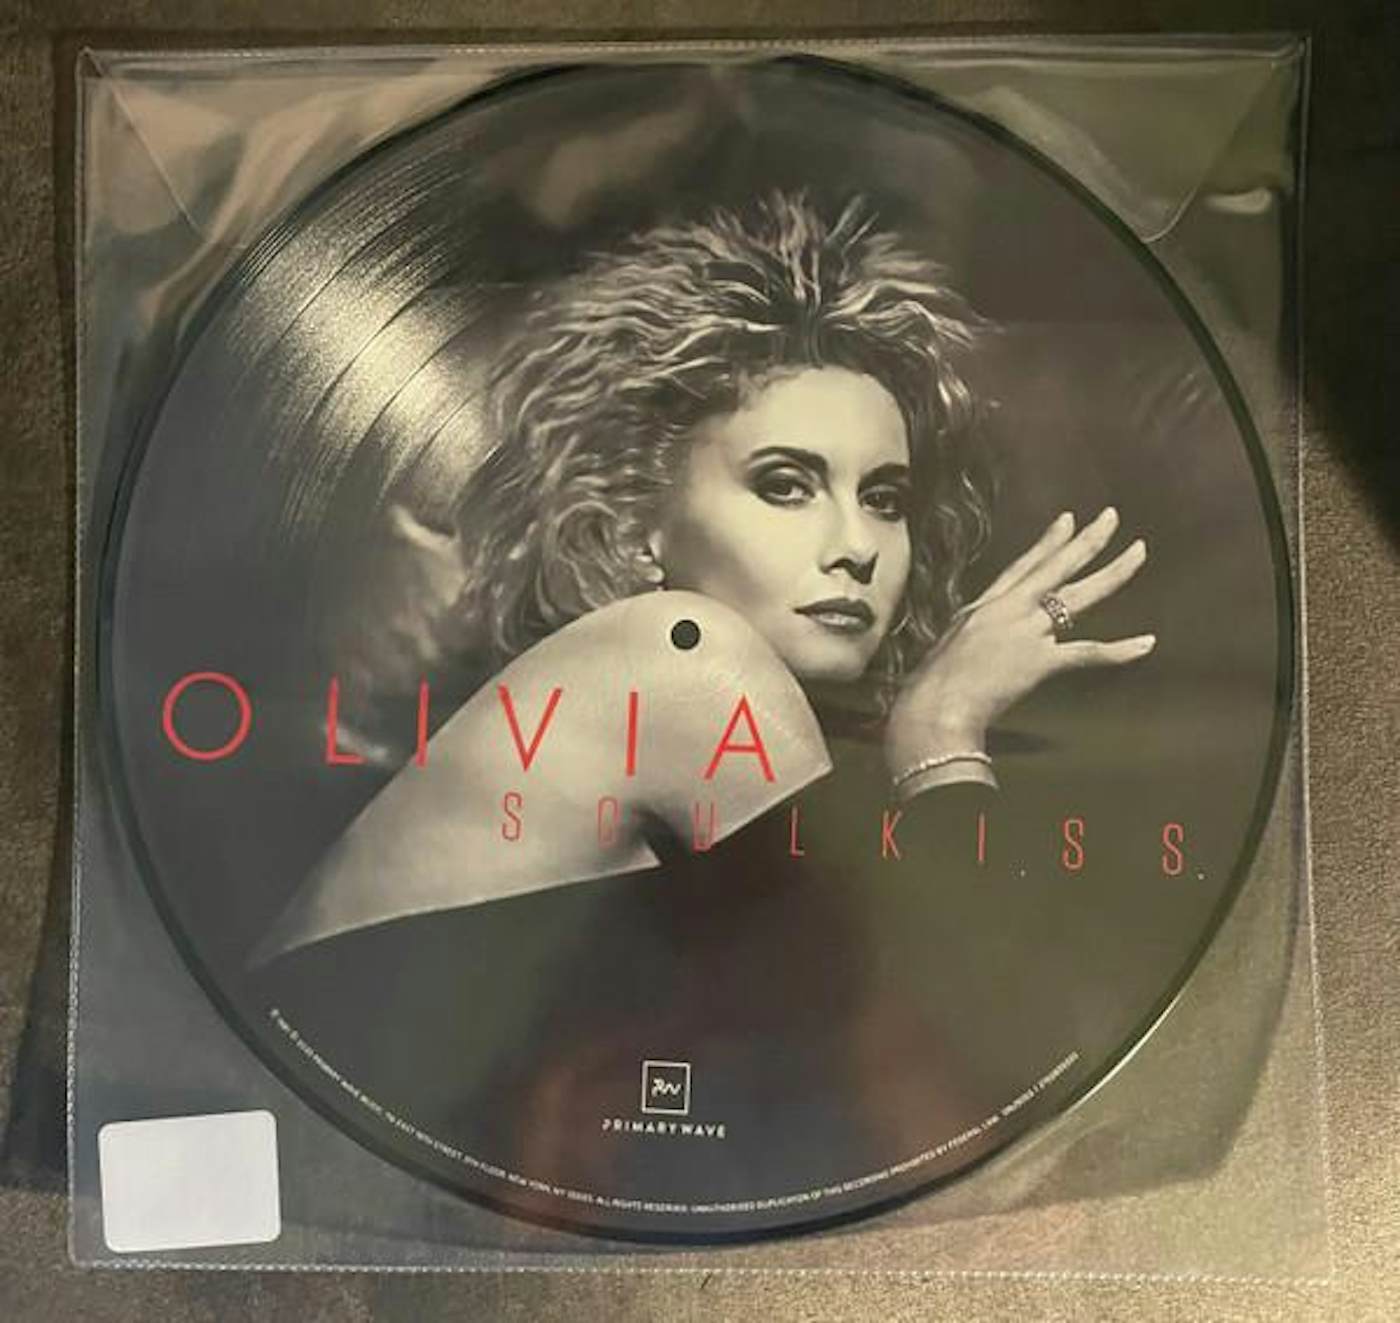 CD Olivia Newton John Soul Kiss P33R20001 POLYSTAR /00110 - CD